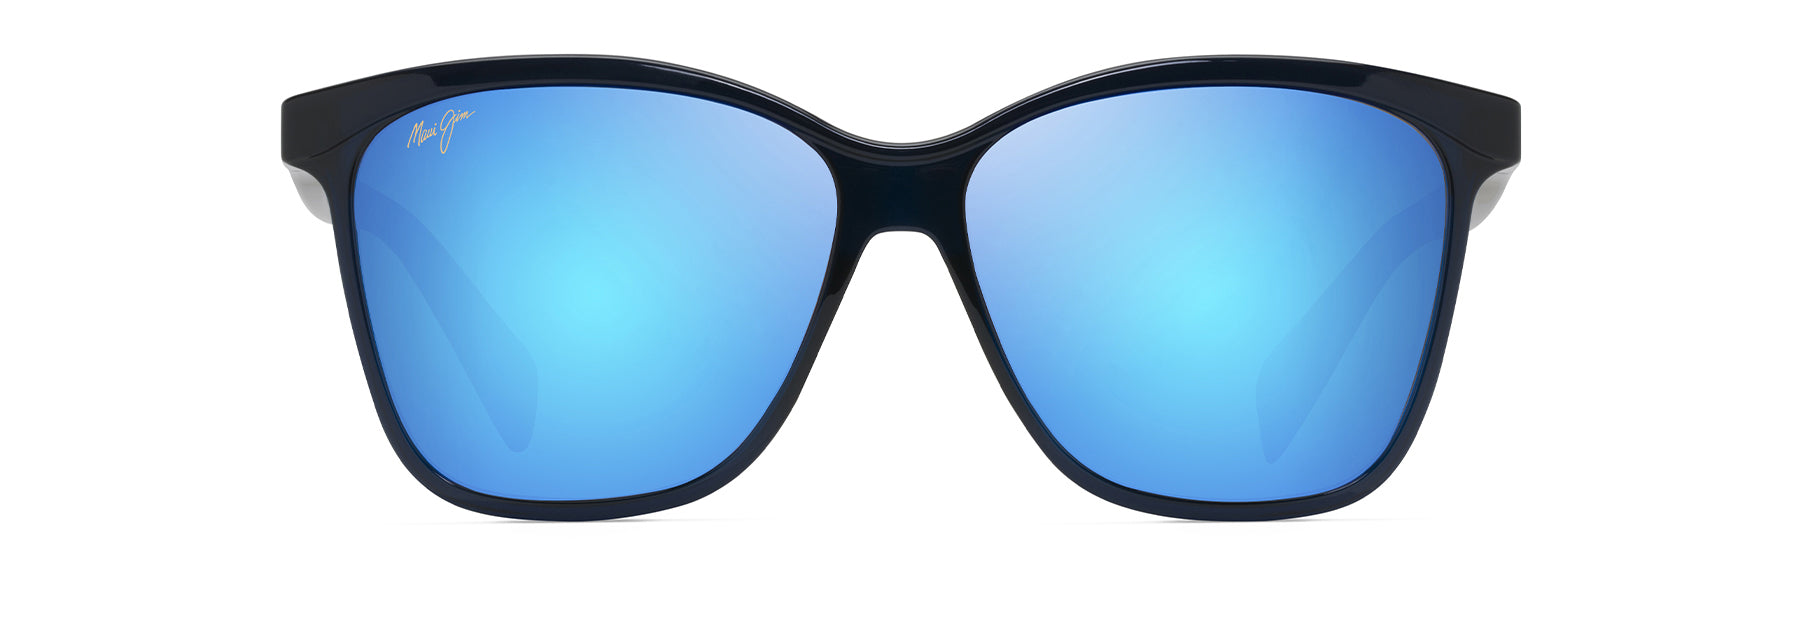 Maui Jim Liquid Sunshine Sunglasses